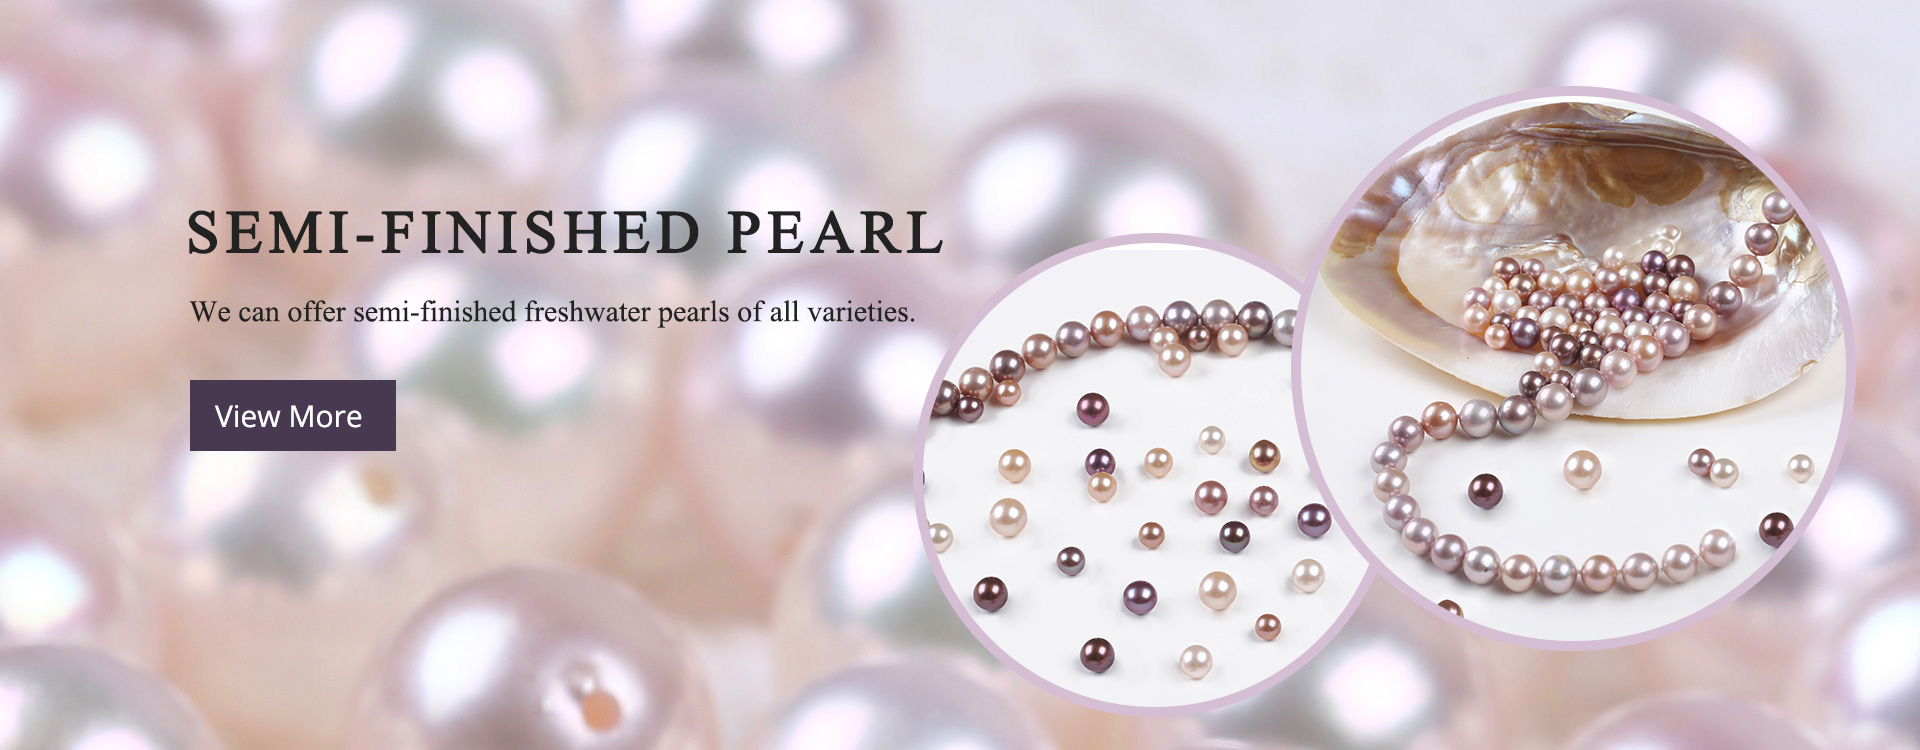 natural color baroque pearl